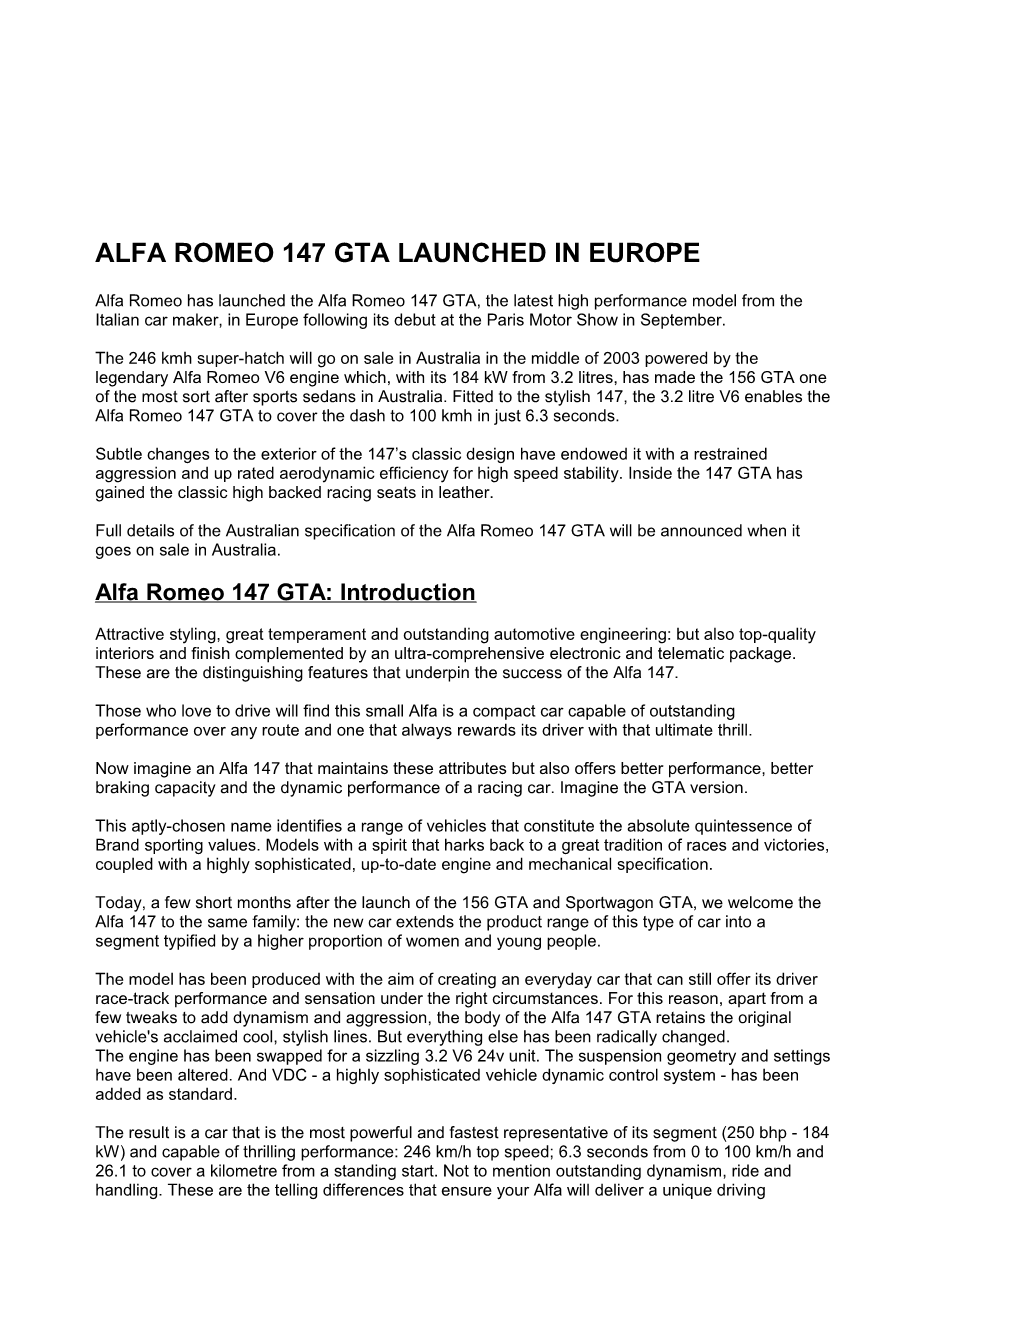 Alfa Romeo 147 Gta Launched in Europe